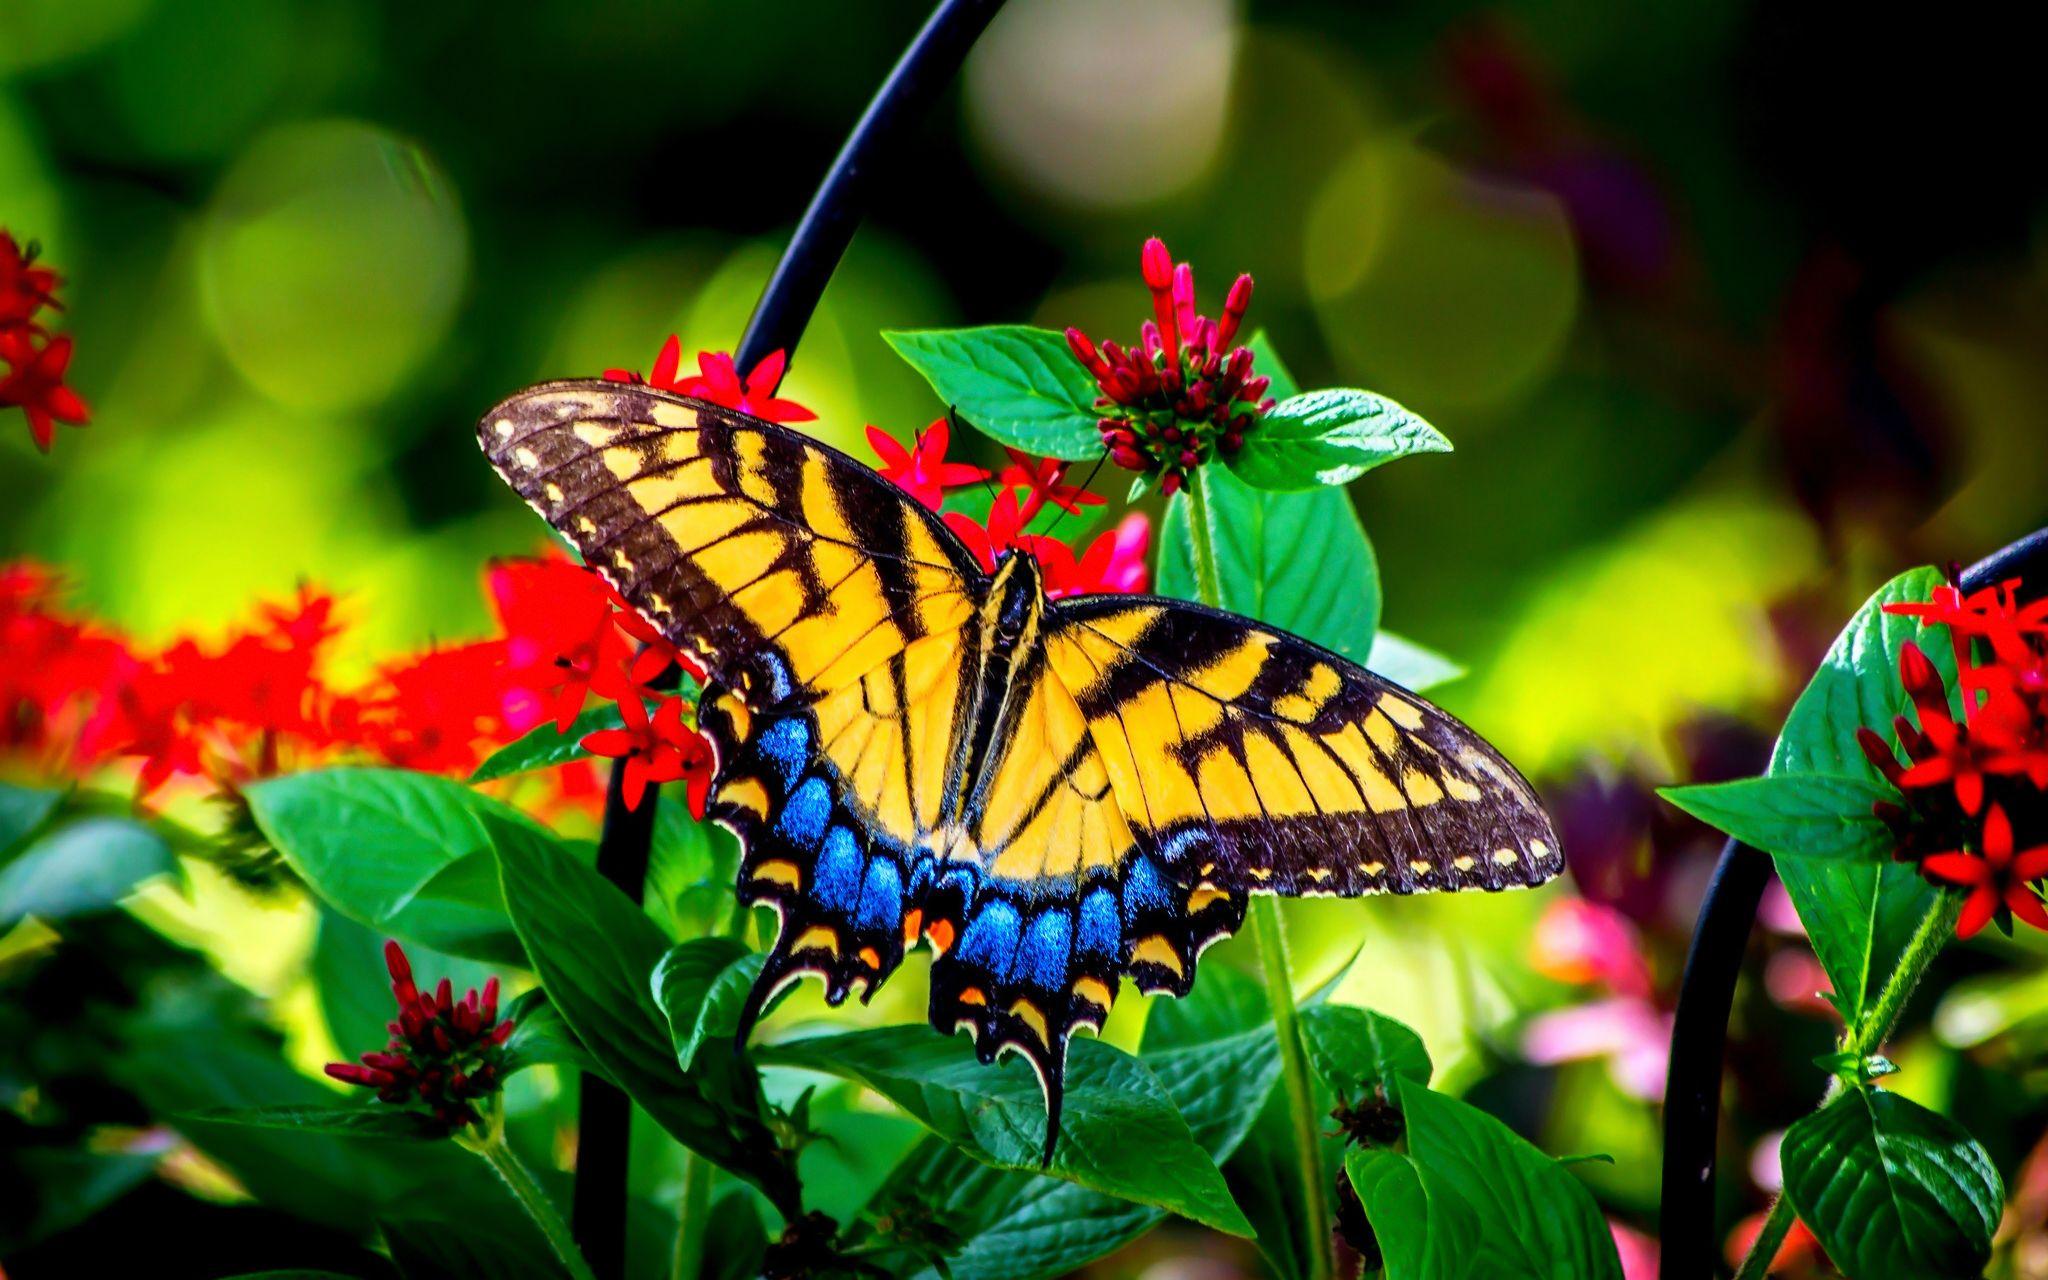 Beautiful Butterflies in Nature. Butterfly and garden flowers beauty nature HD Wallpaper. Flower beauty, Butterfly garden, Flower wallpaper